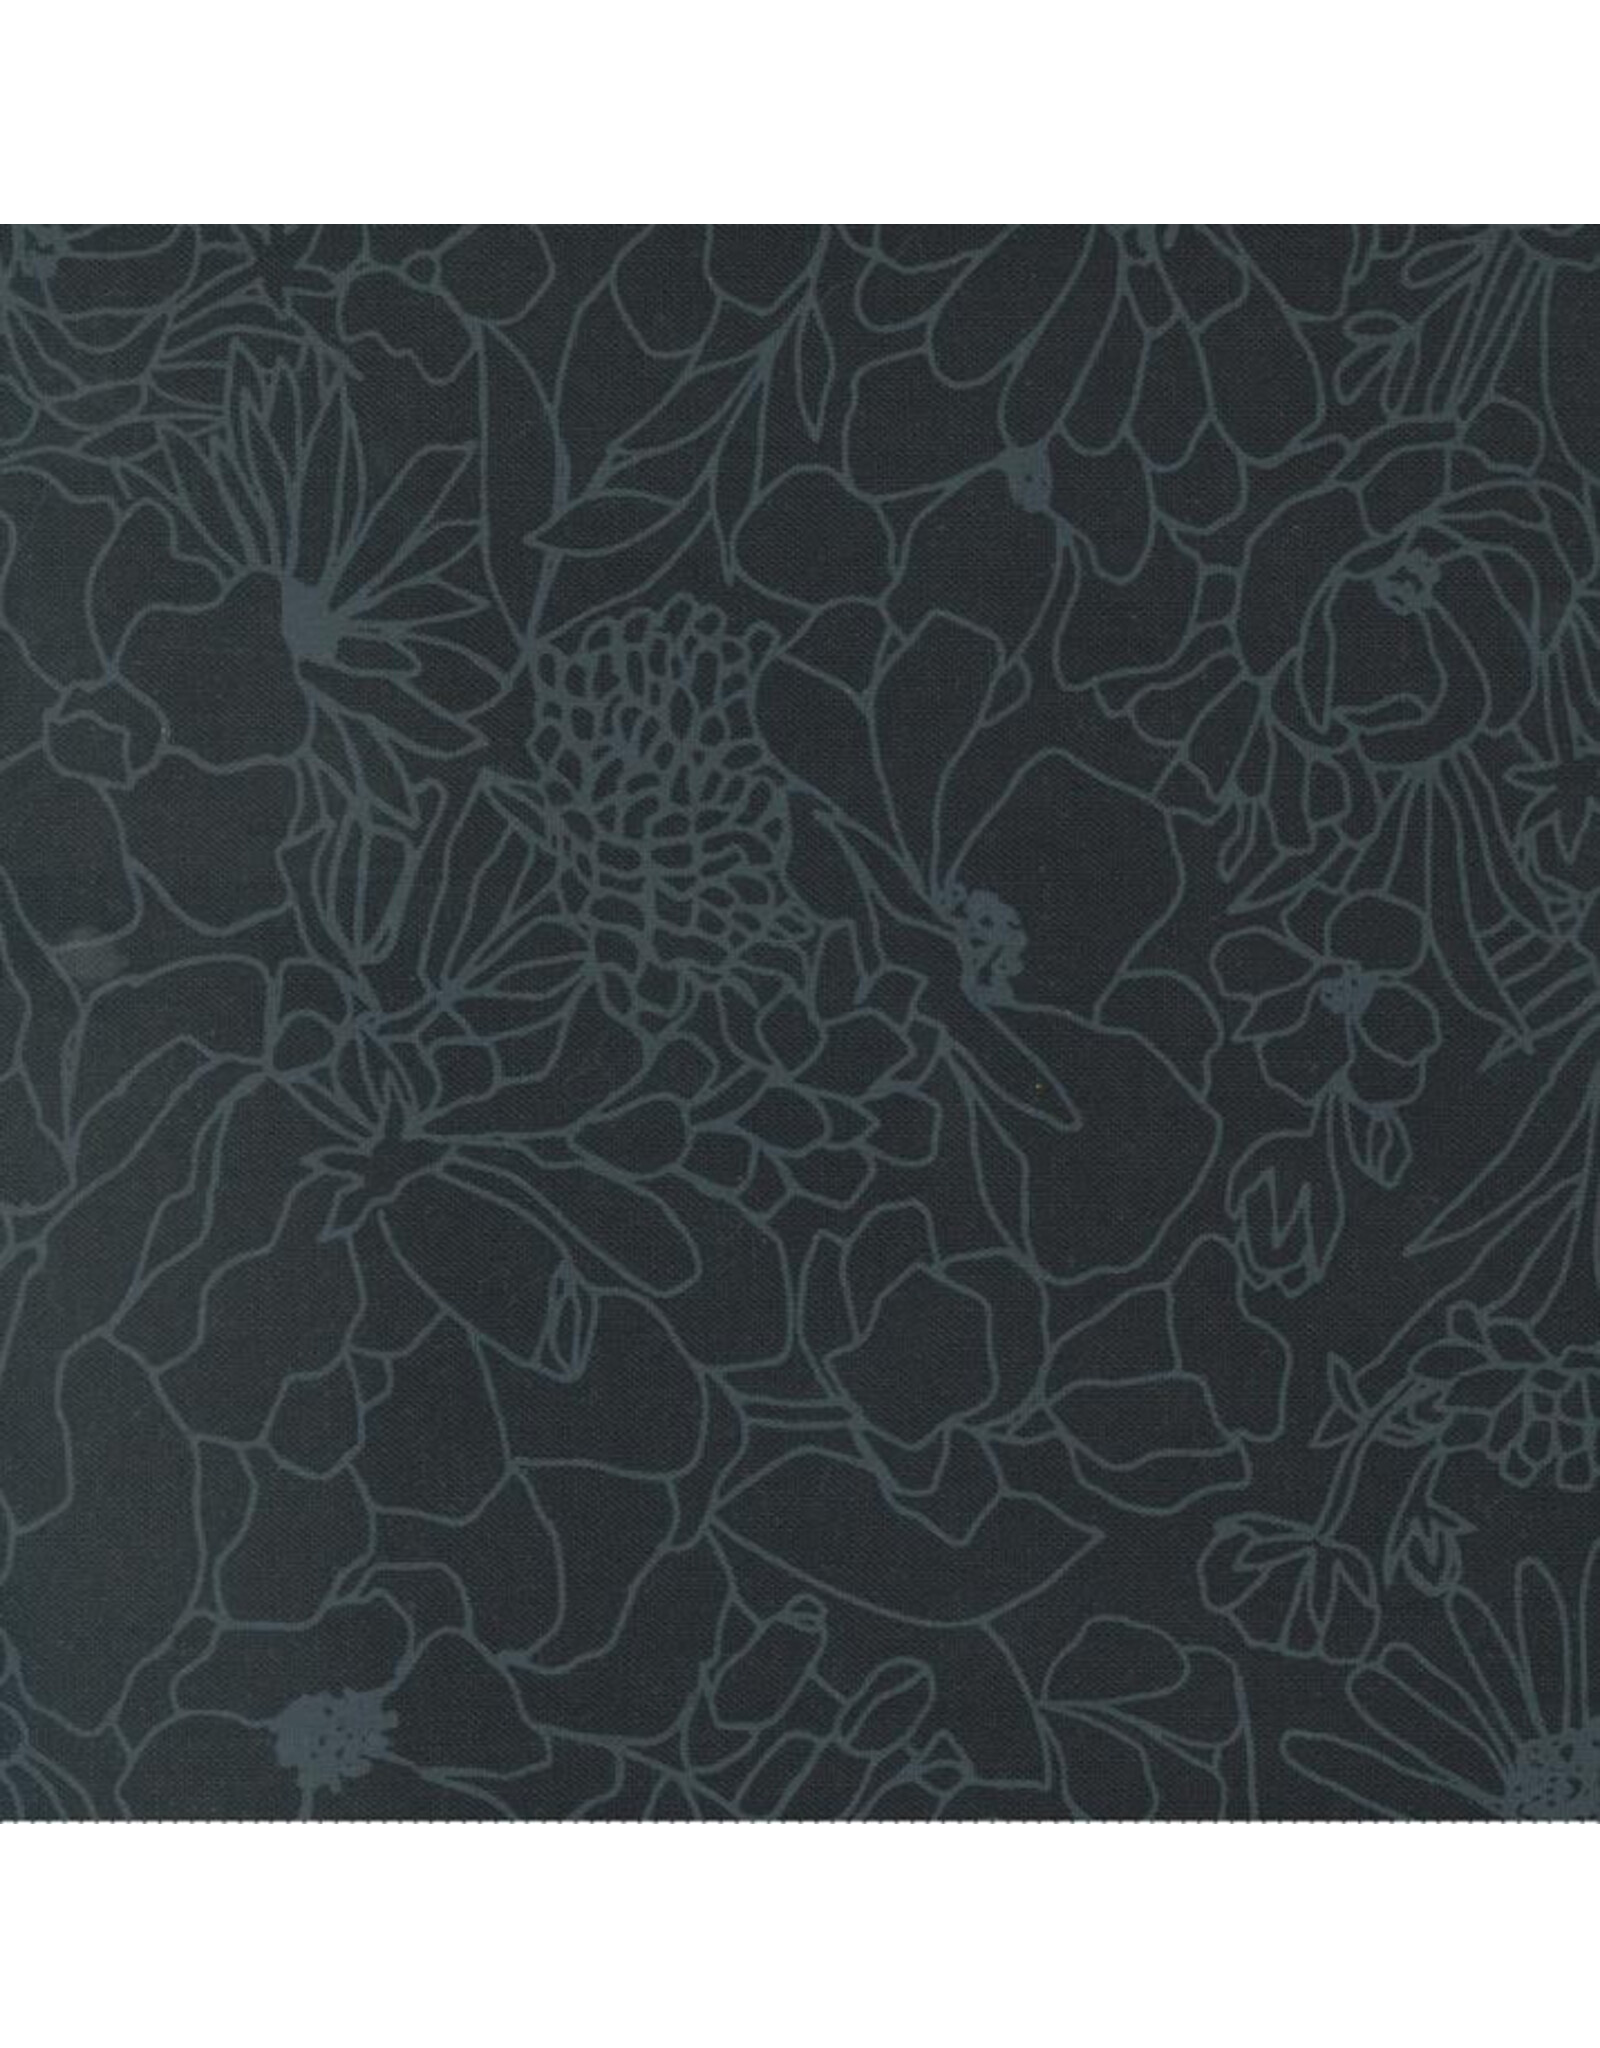 Alli K Design Gilded, Doodle Garden in Ink Black on Black, Fabric Half-Yards